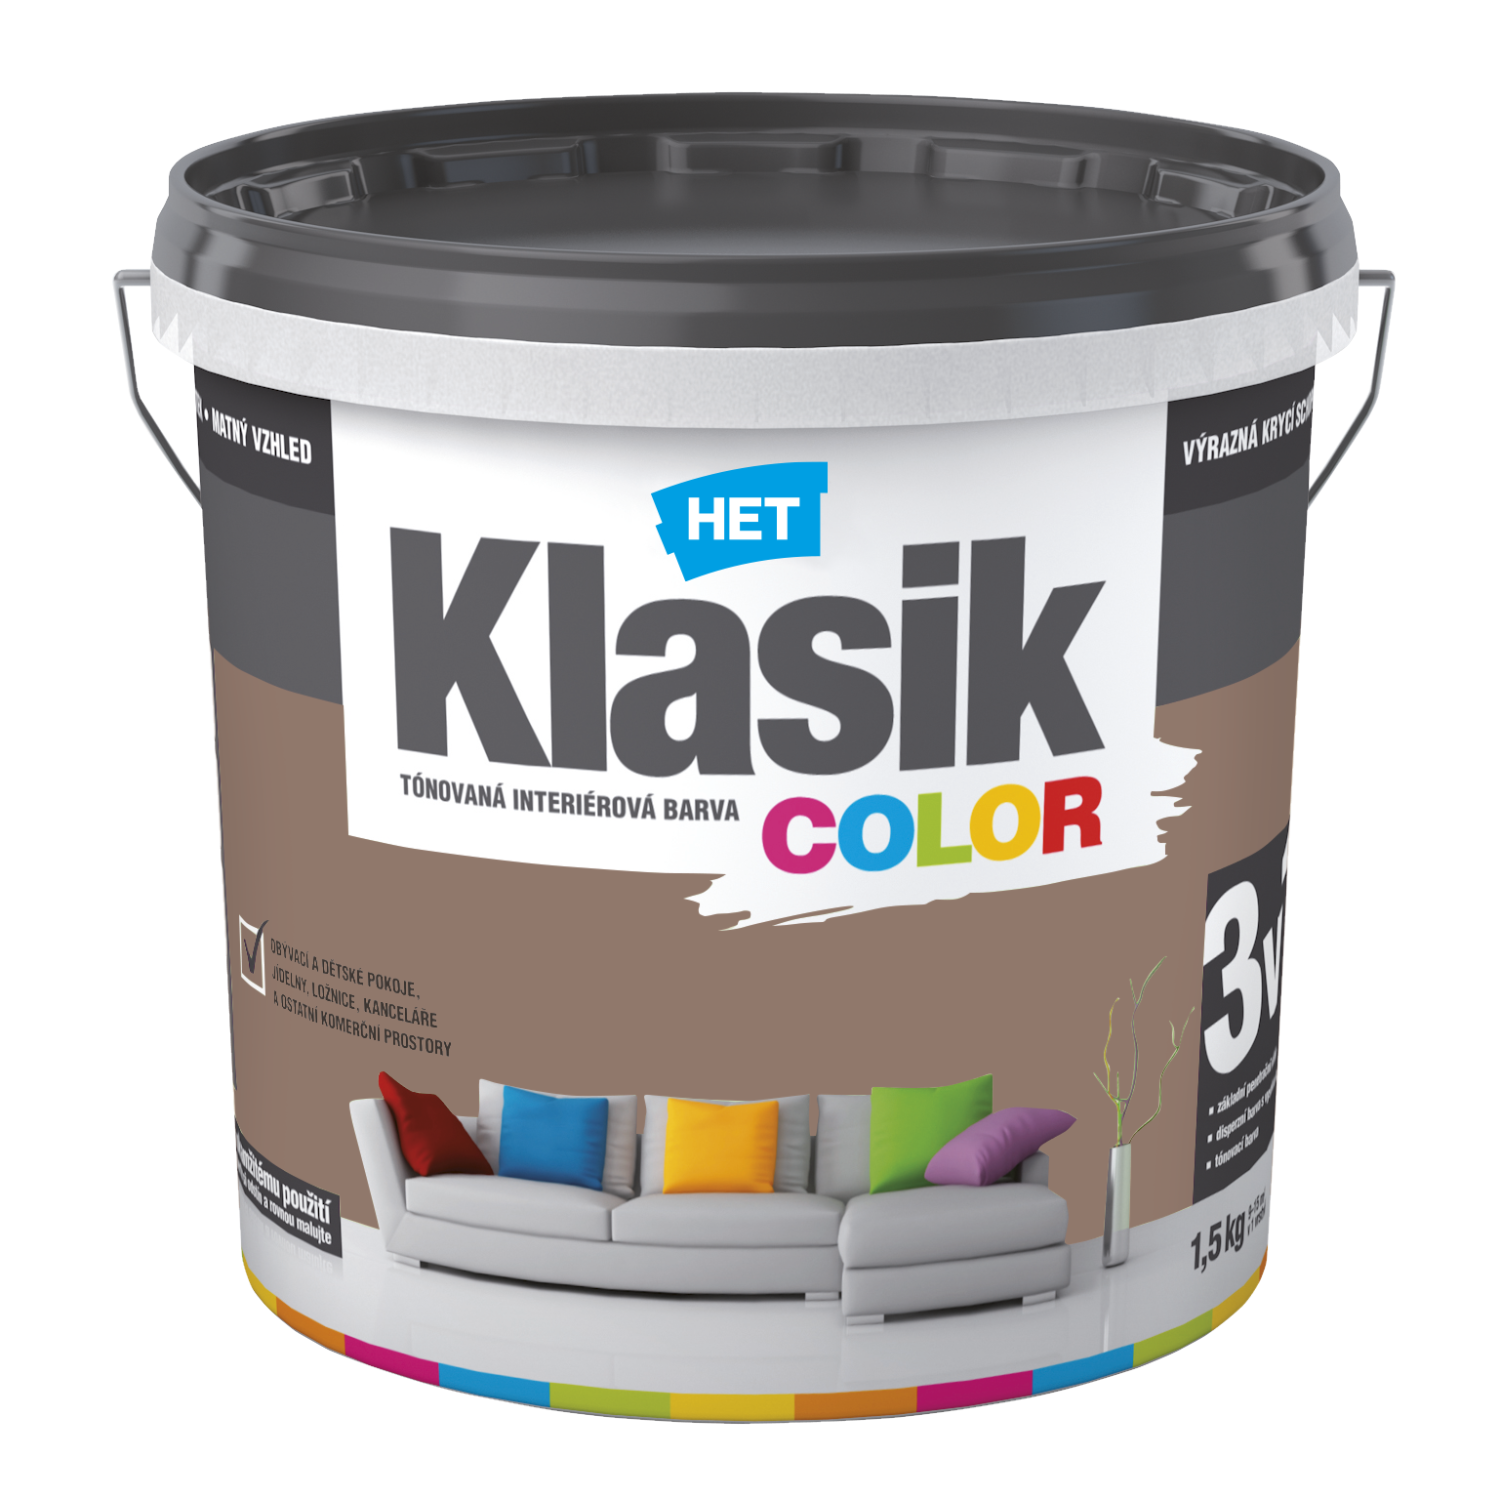 HET Klasik COLOR tónovaná interiérová akrylátová disperzná oteruvzdorná farba 1,5 kg, KC0277 - hnedý čokoládový